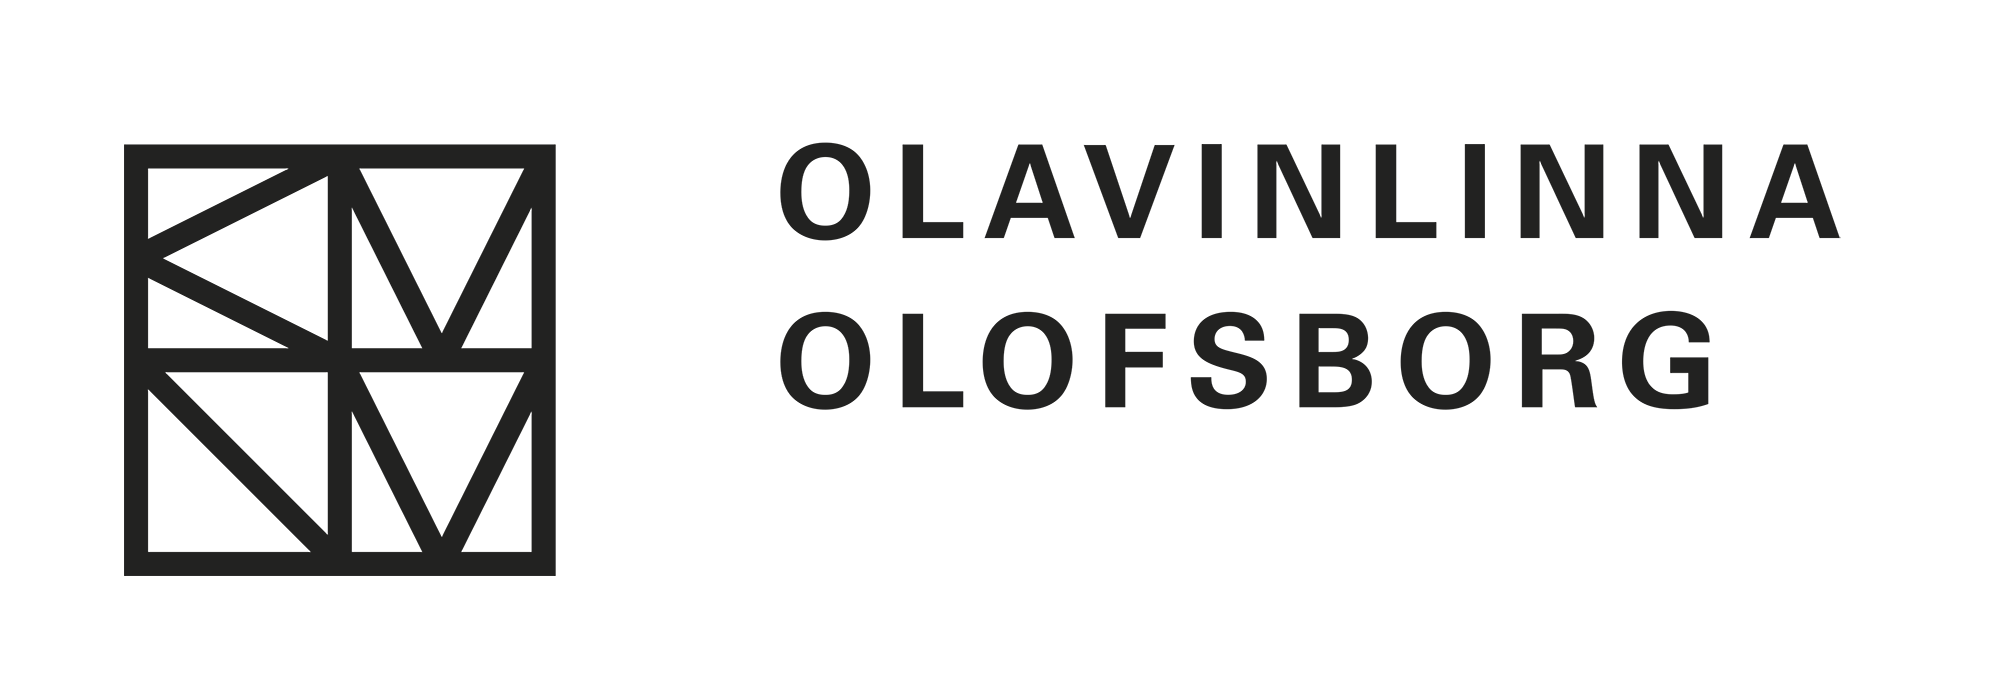 Olavinlinna